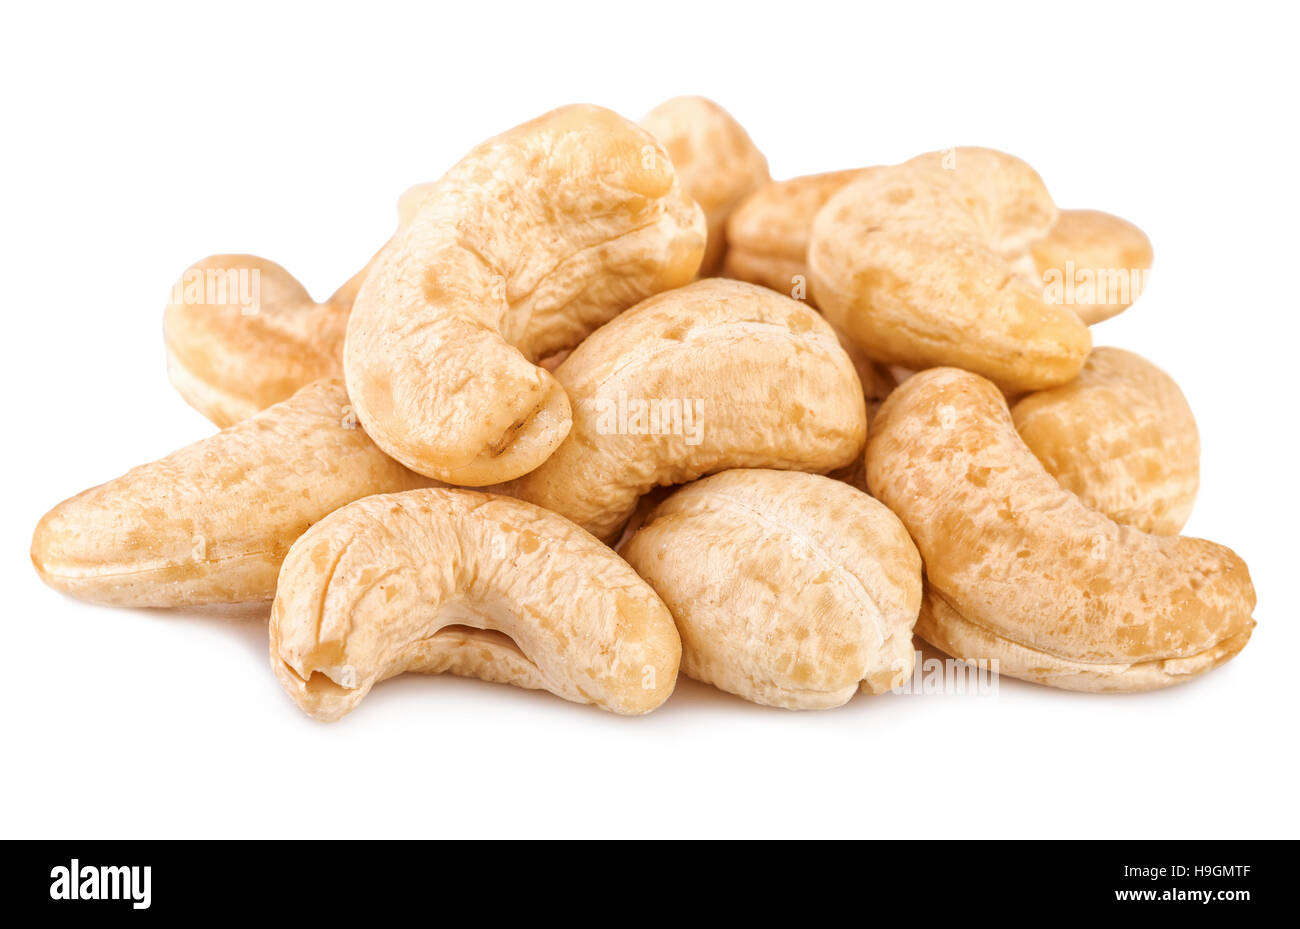 Cashew nuts on white. Cashew close-up Stock Photo